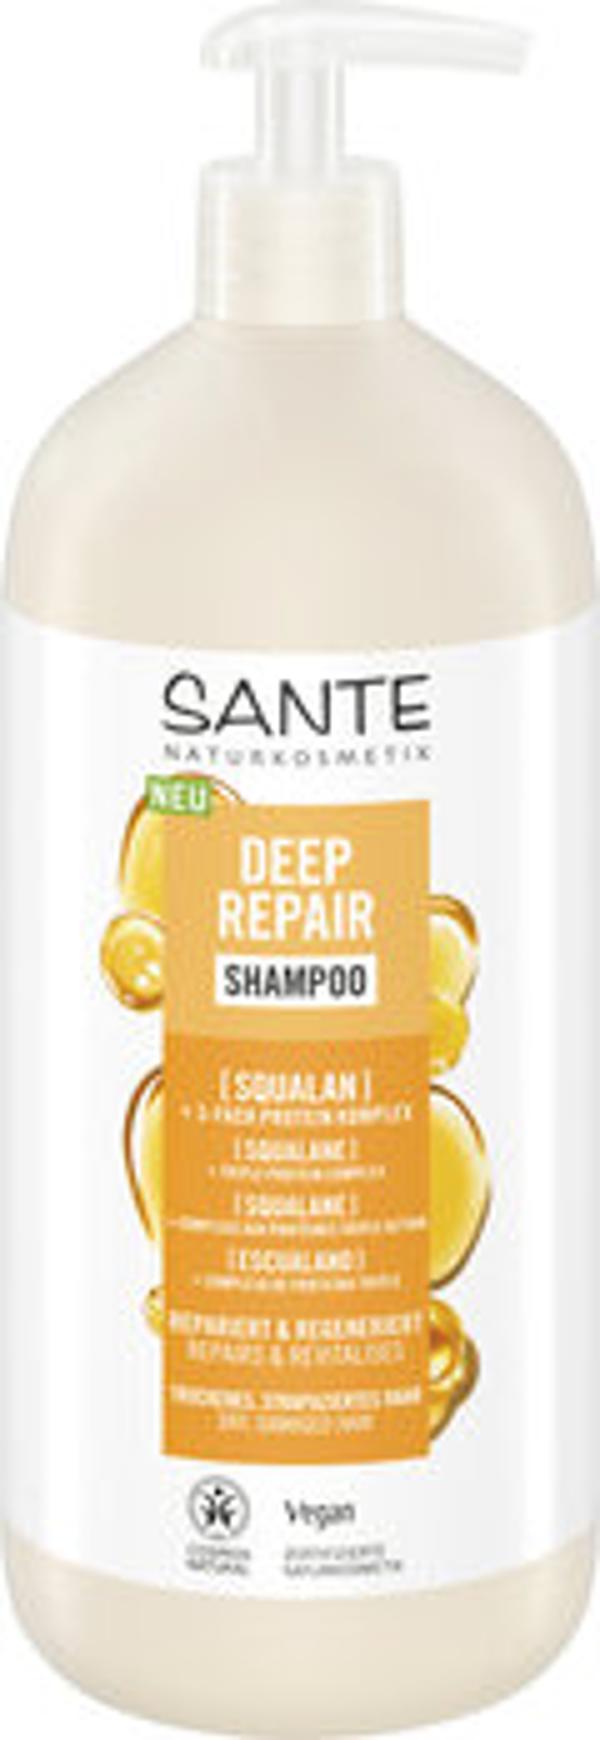 Produktfoto zu Deep Repair Shampoo Squalan 950ml Sante